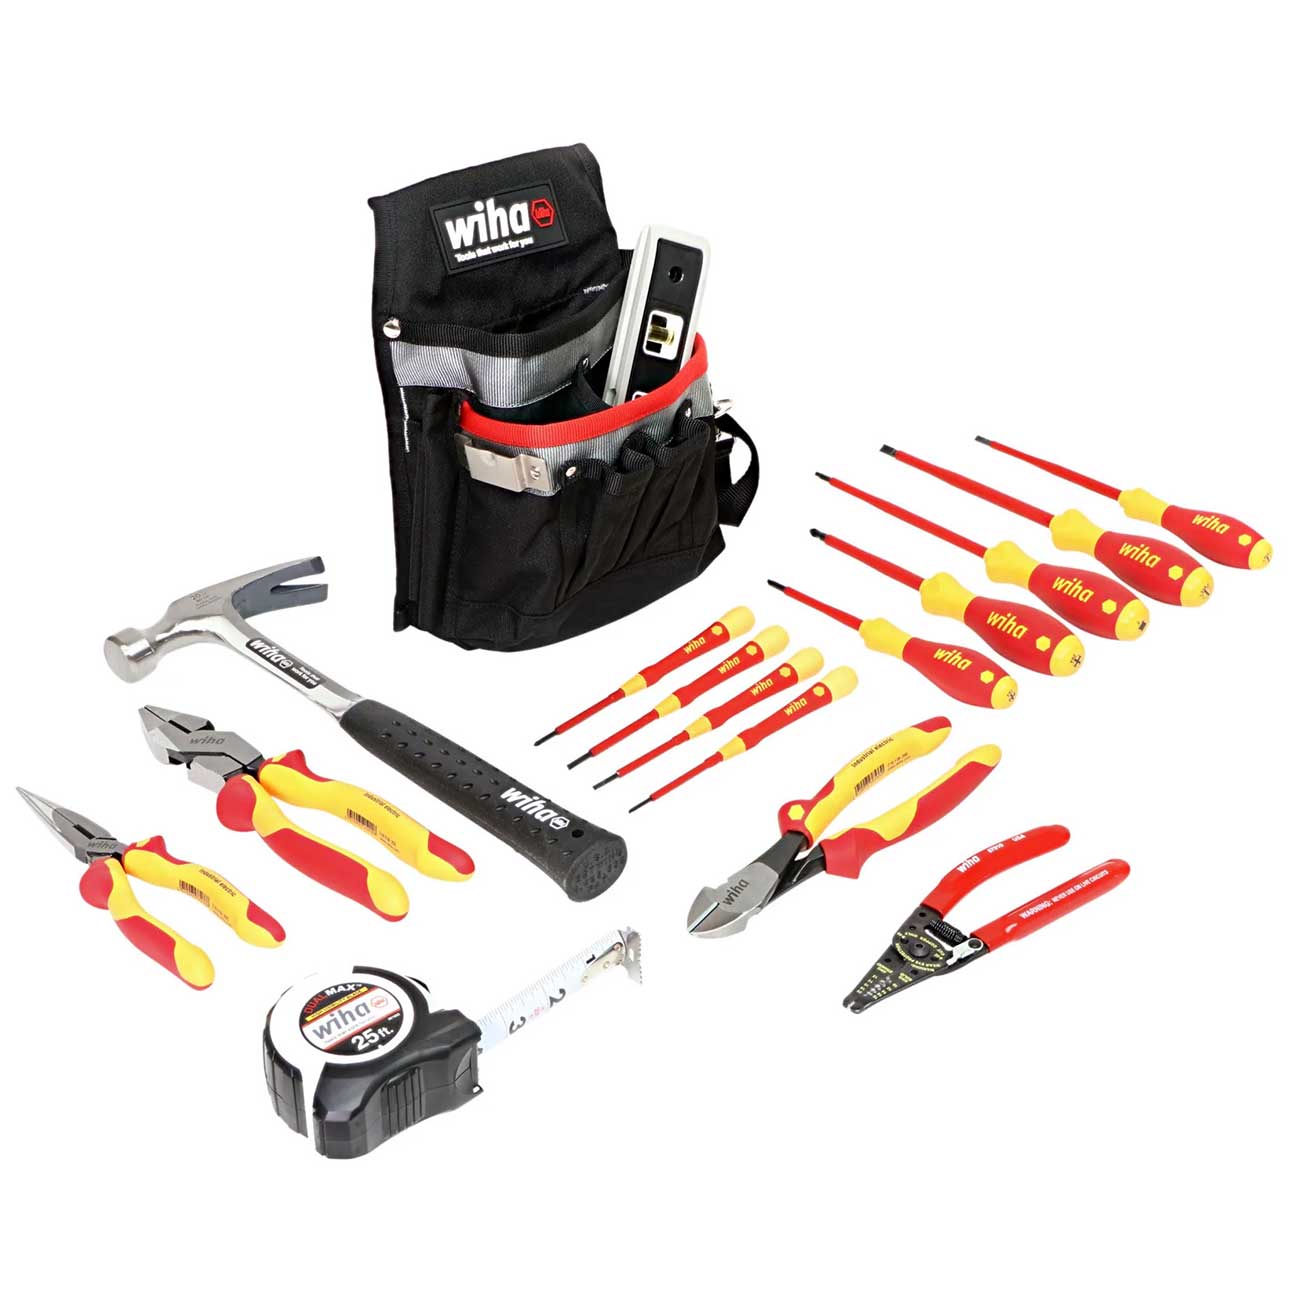 Wiha Insulated Apprentice Electrician's Tool Kit (16 Piece Set)